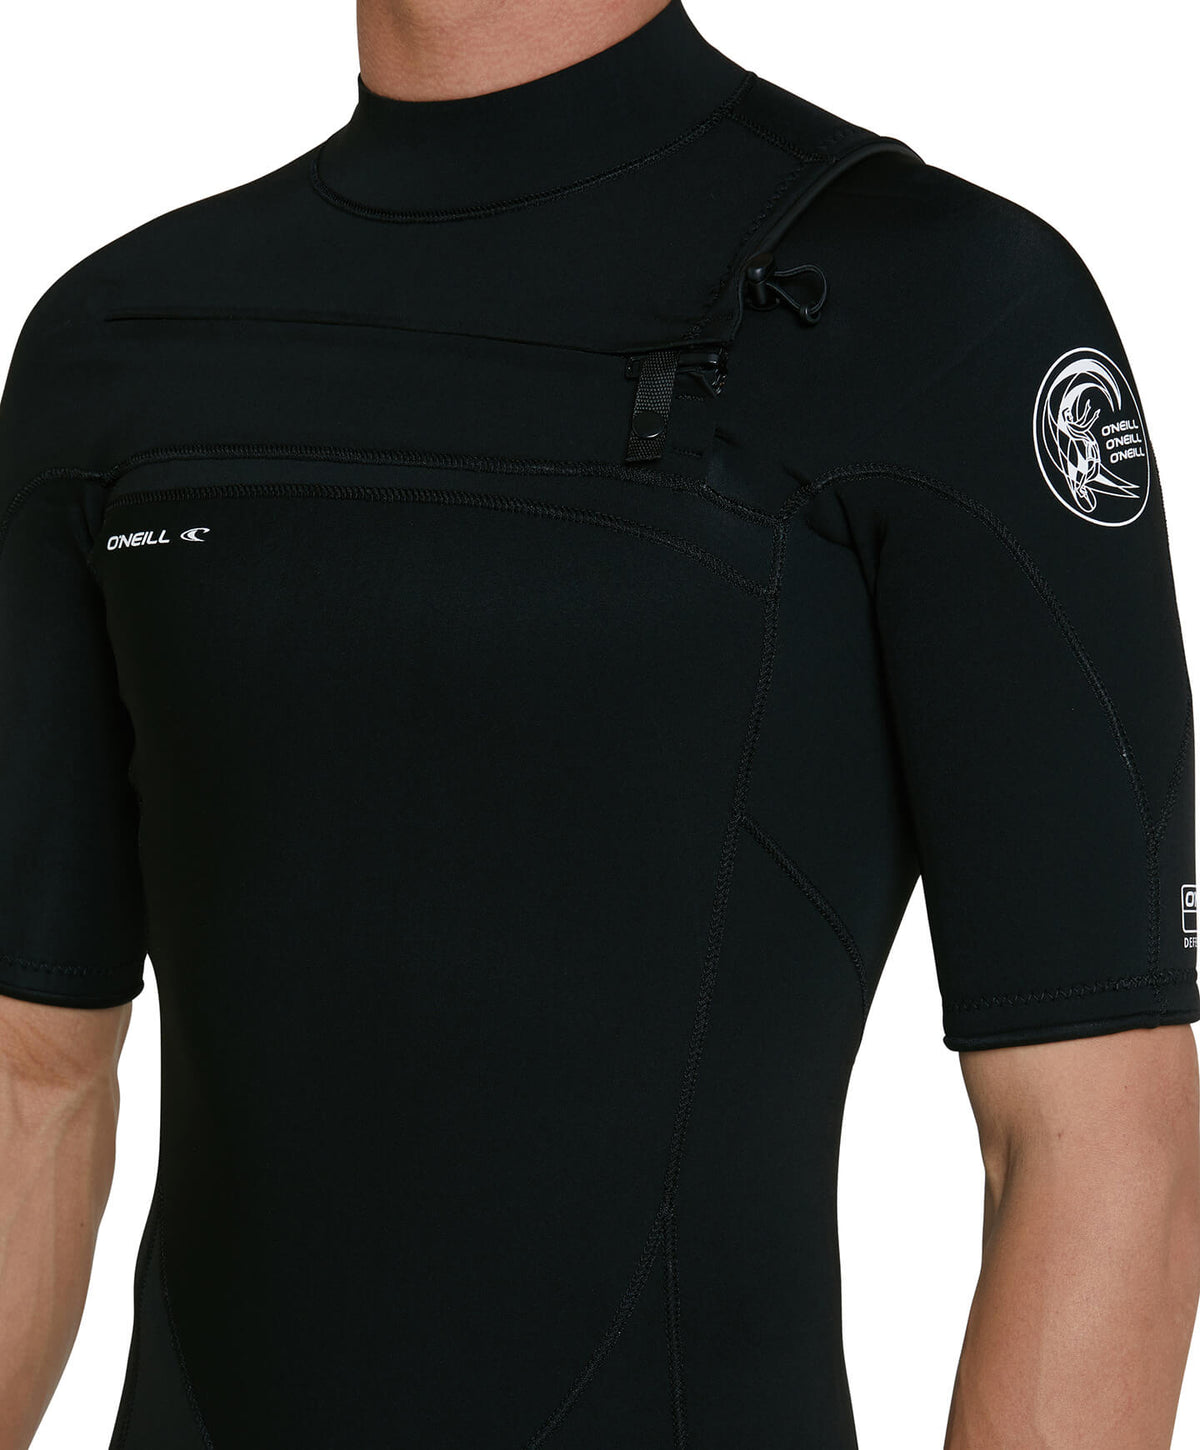 Defender 2mm Short Arm Steamer Chest Zip Wetsuit - Black